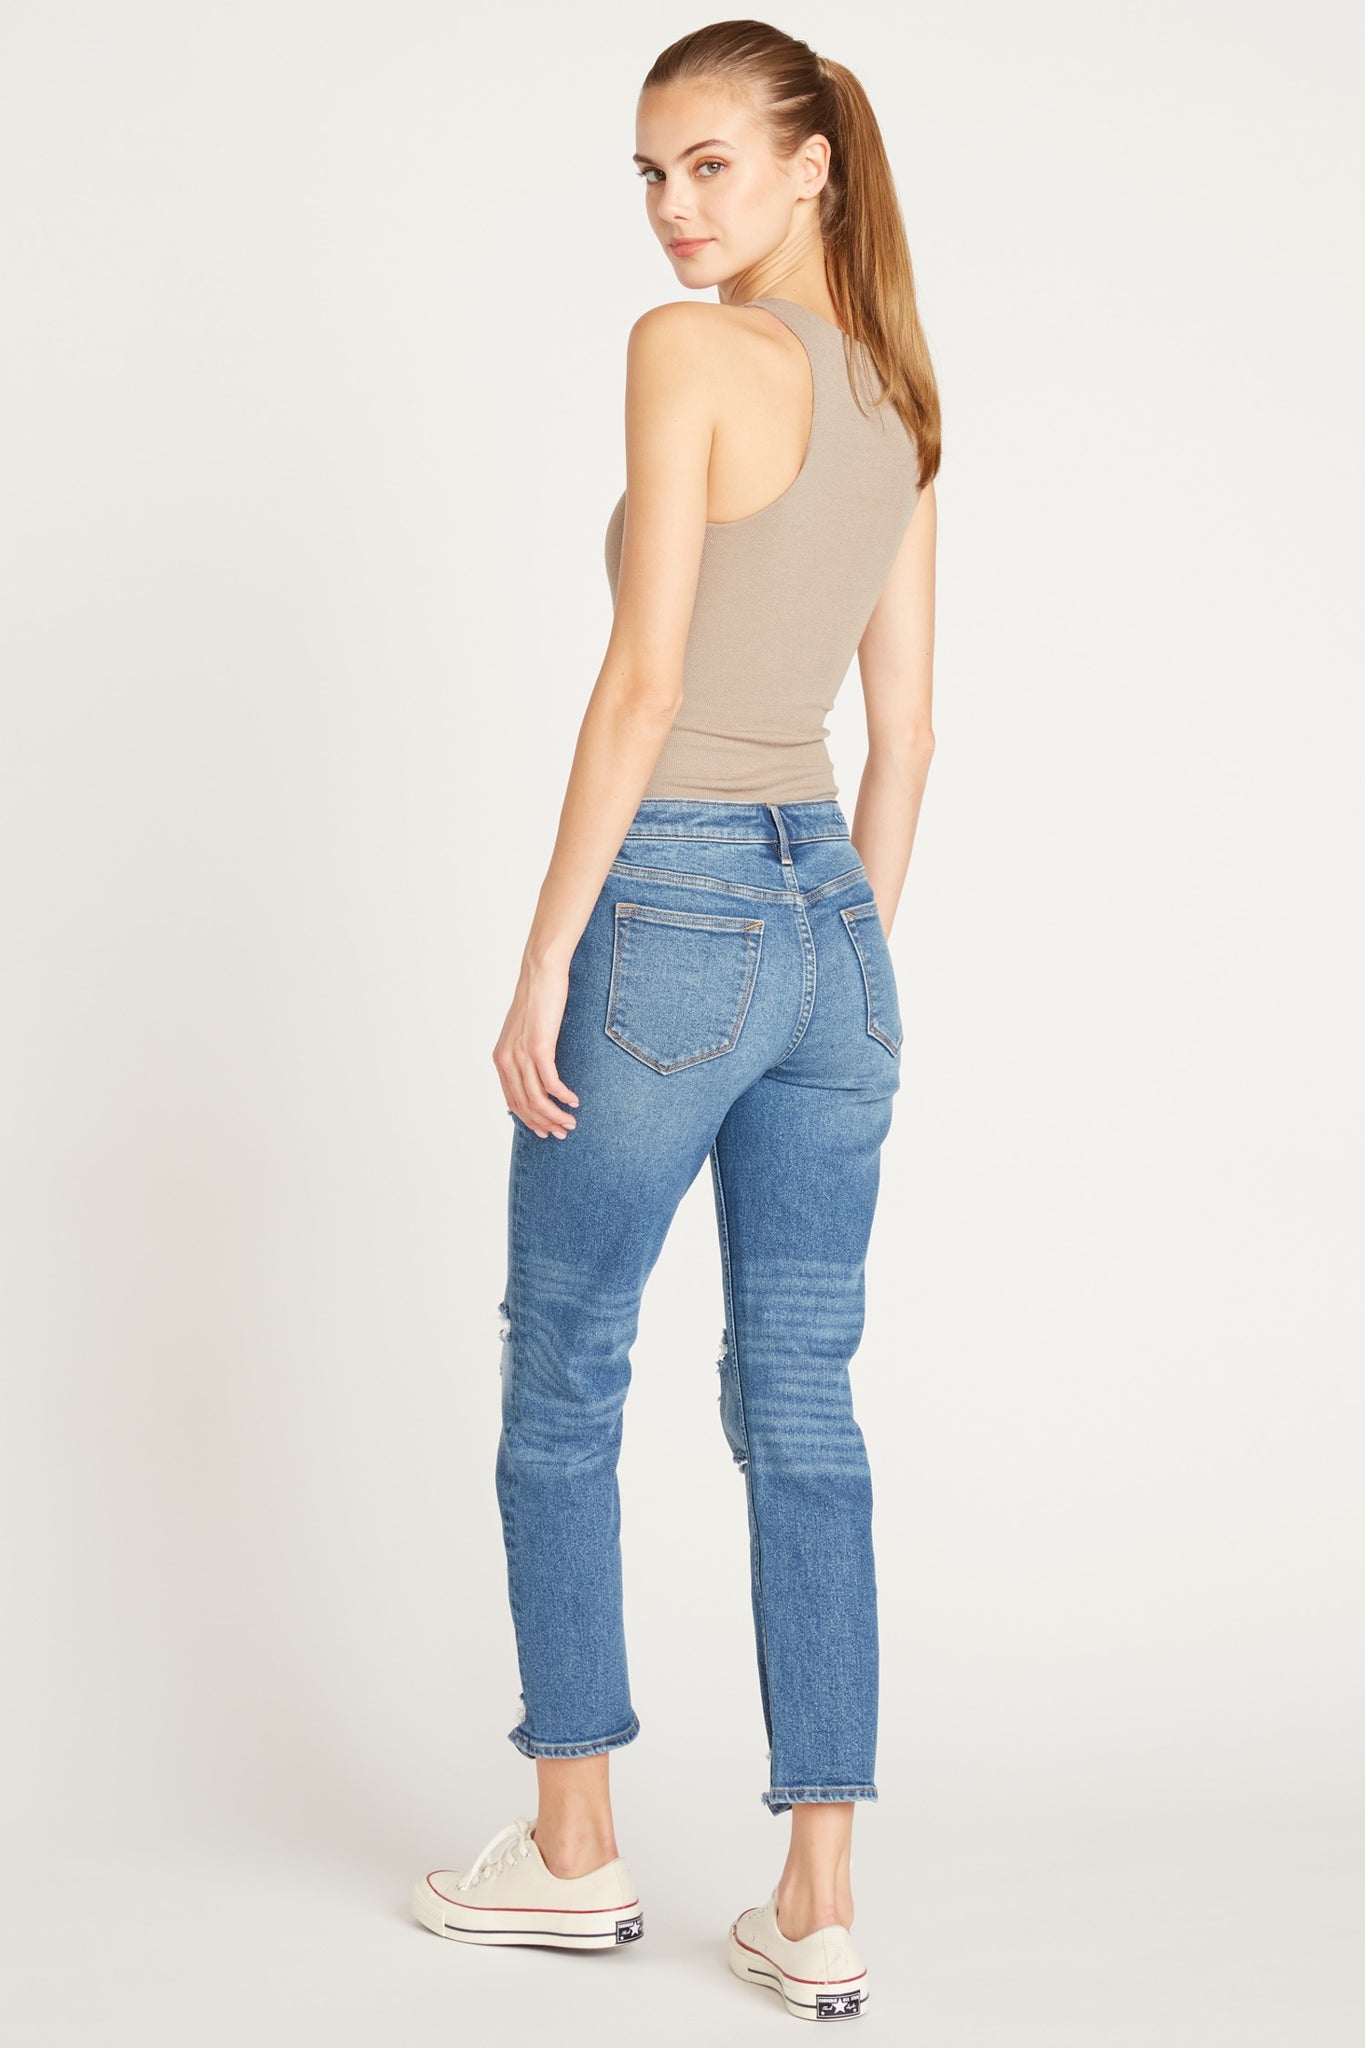 Slim Straight High Jeans